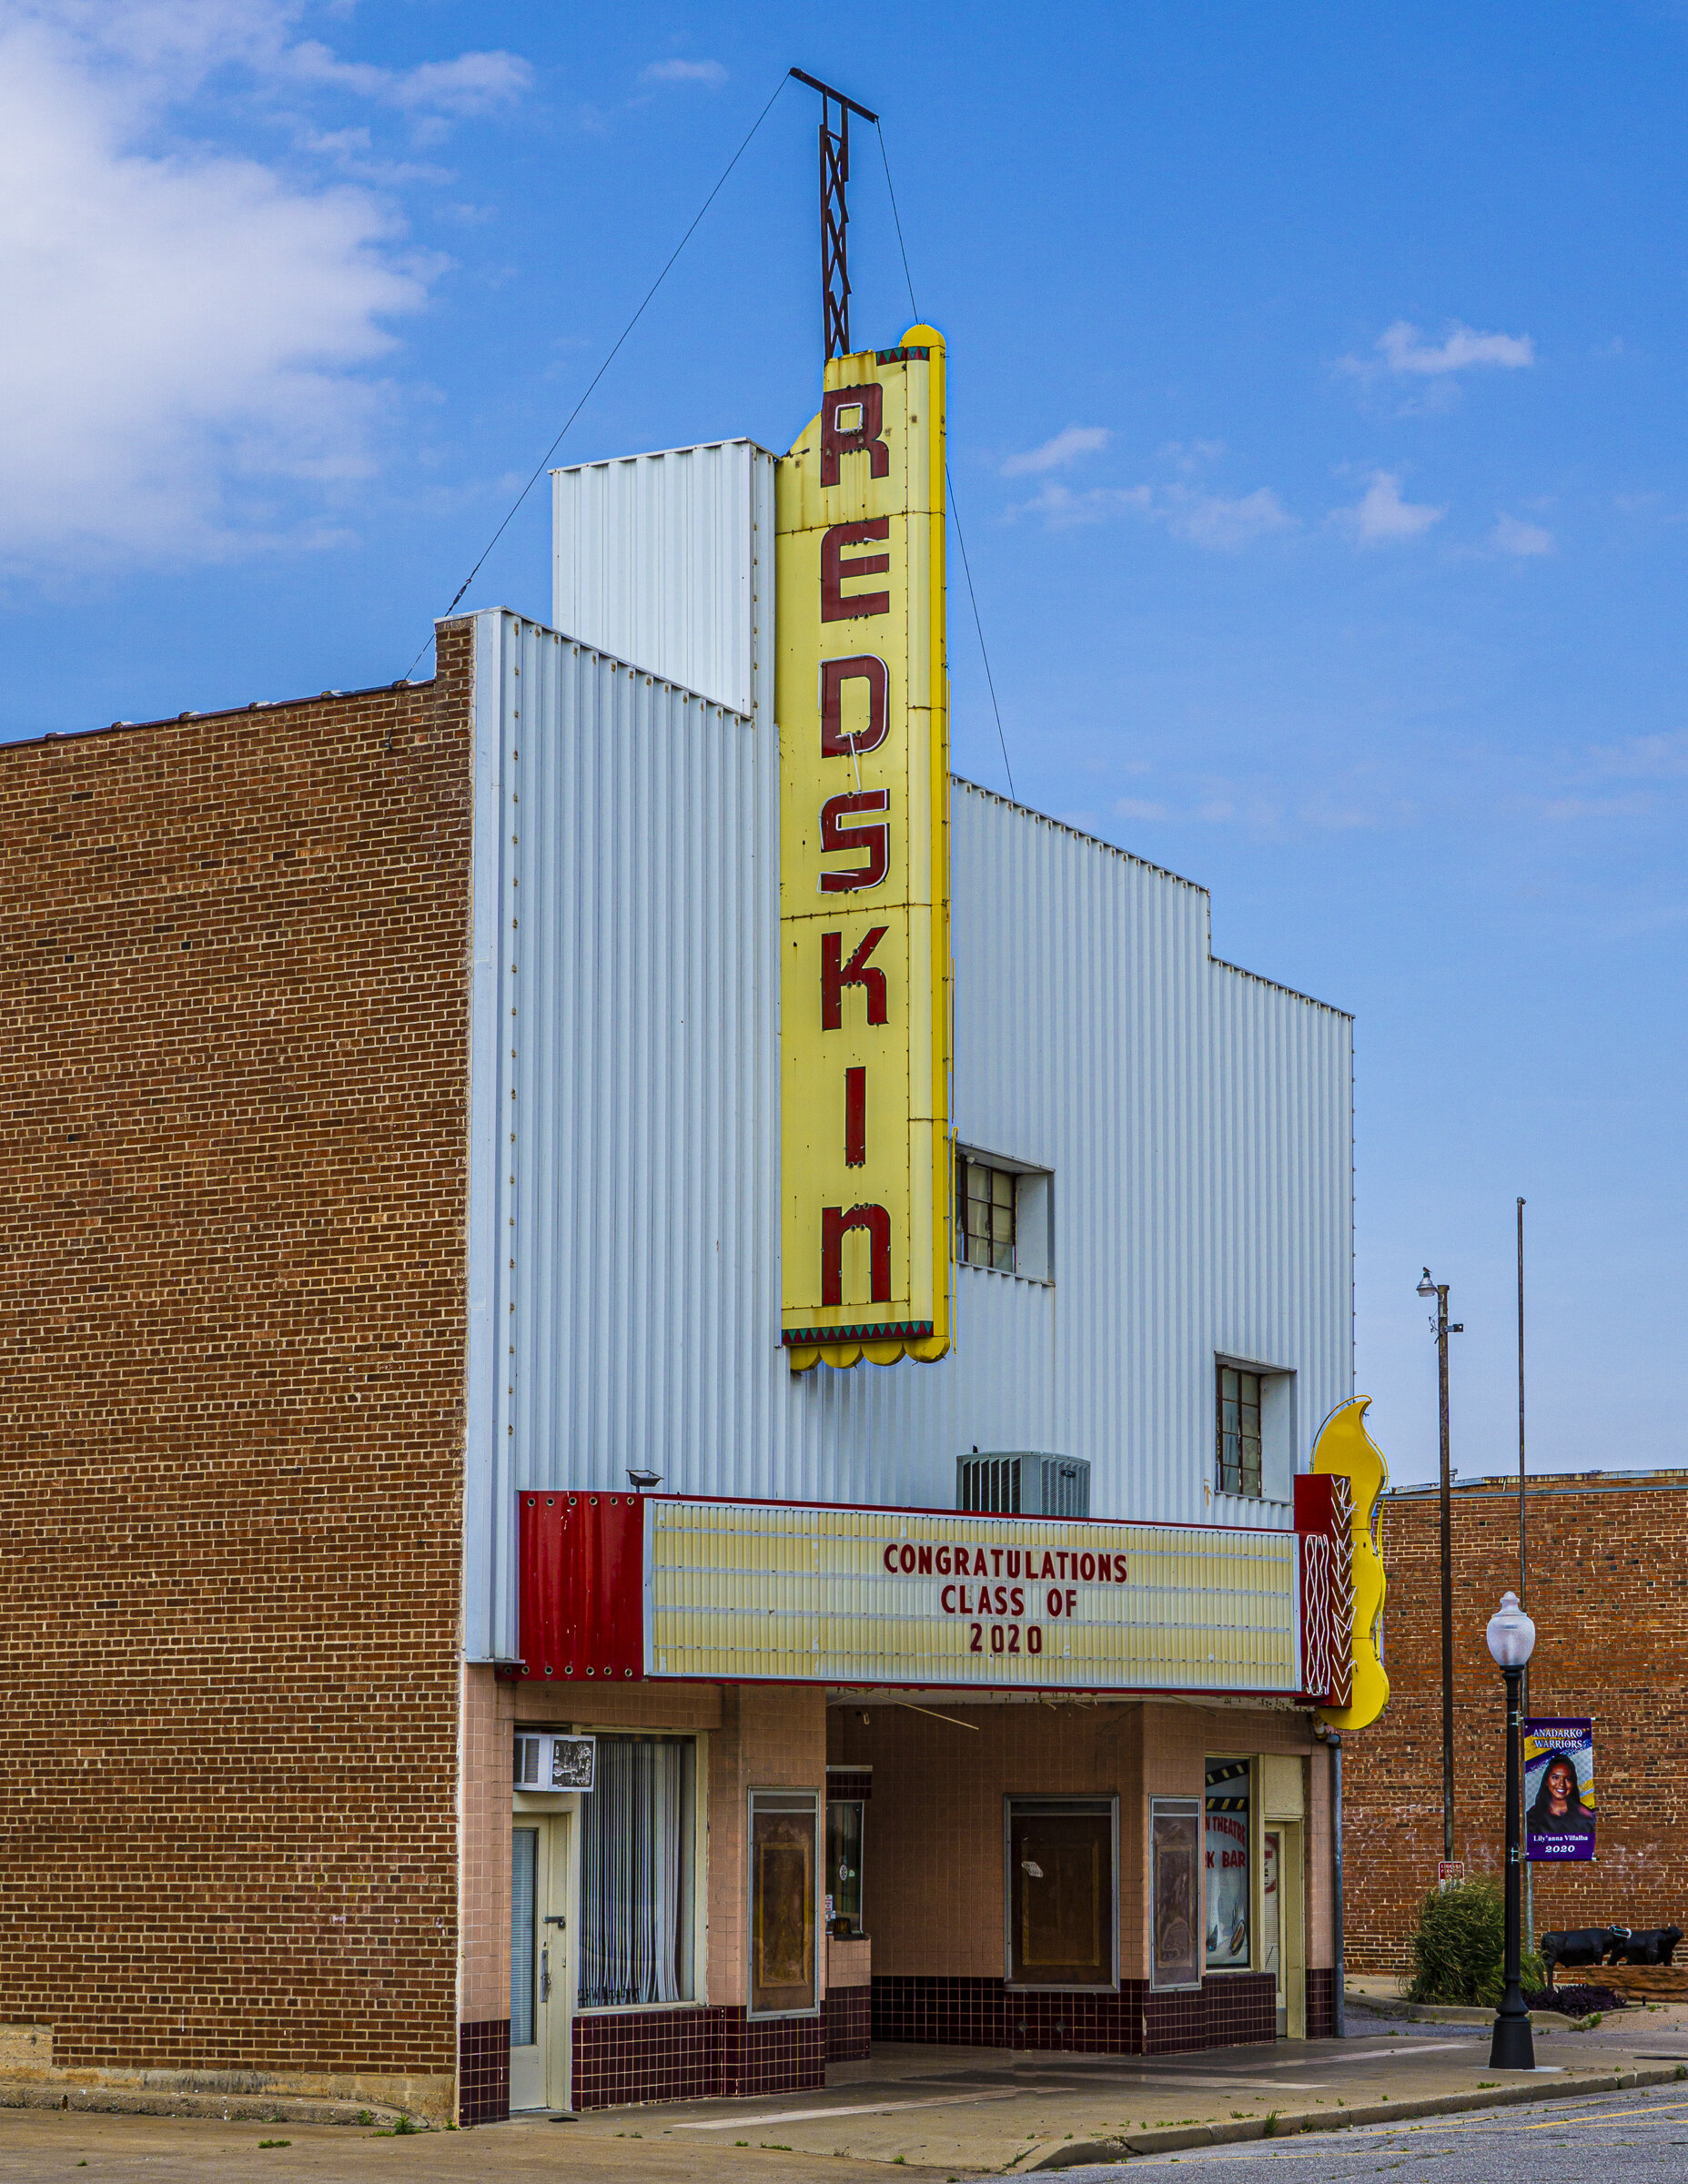 Redskin Theater, Class of 2020